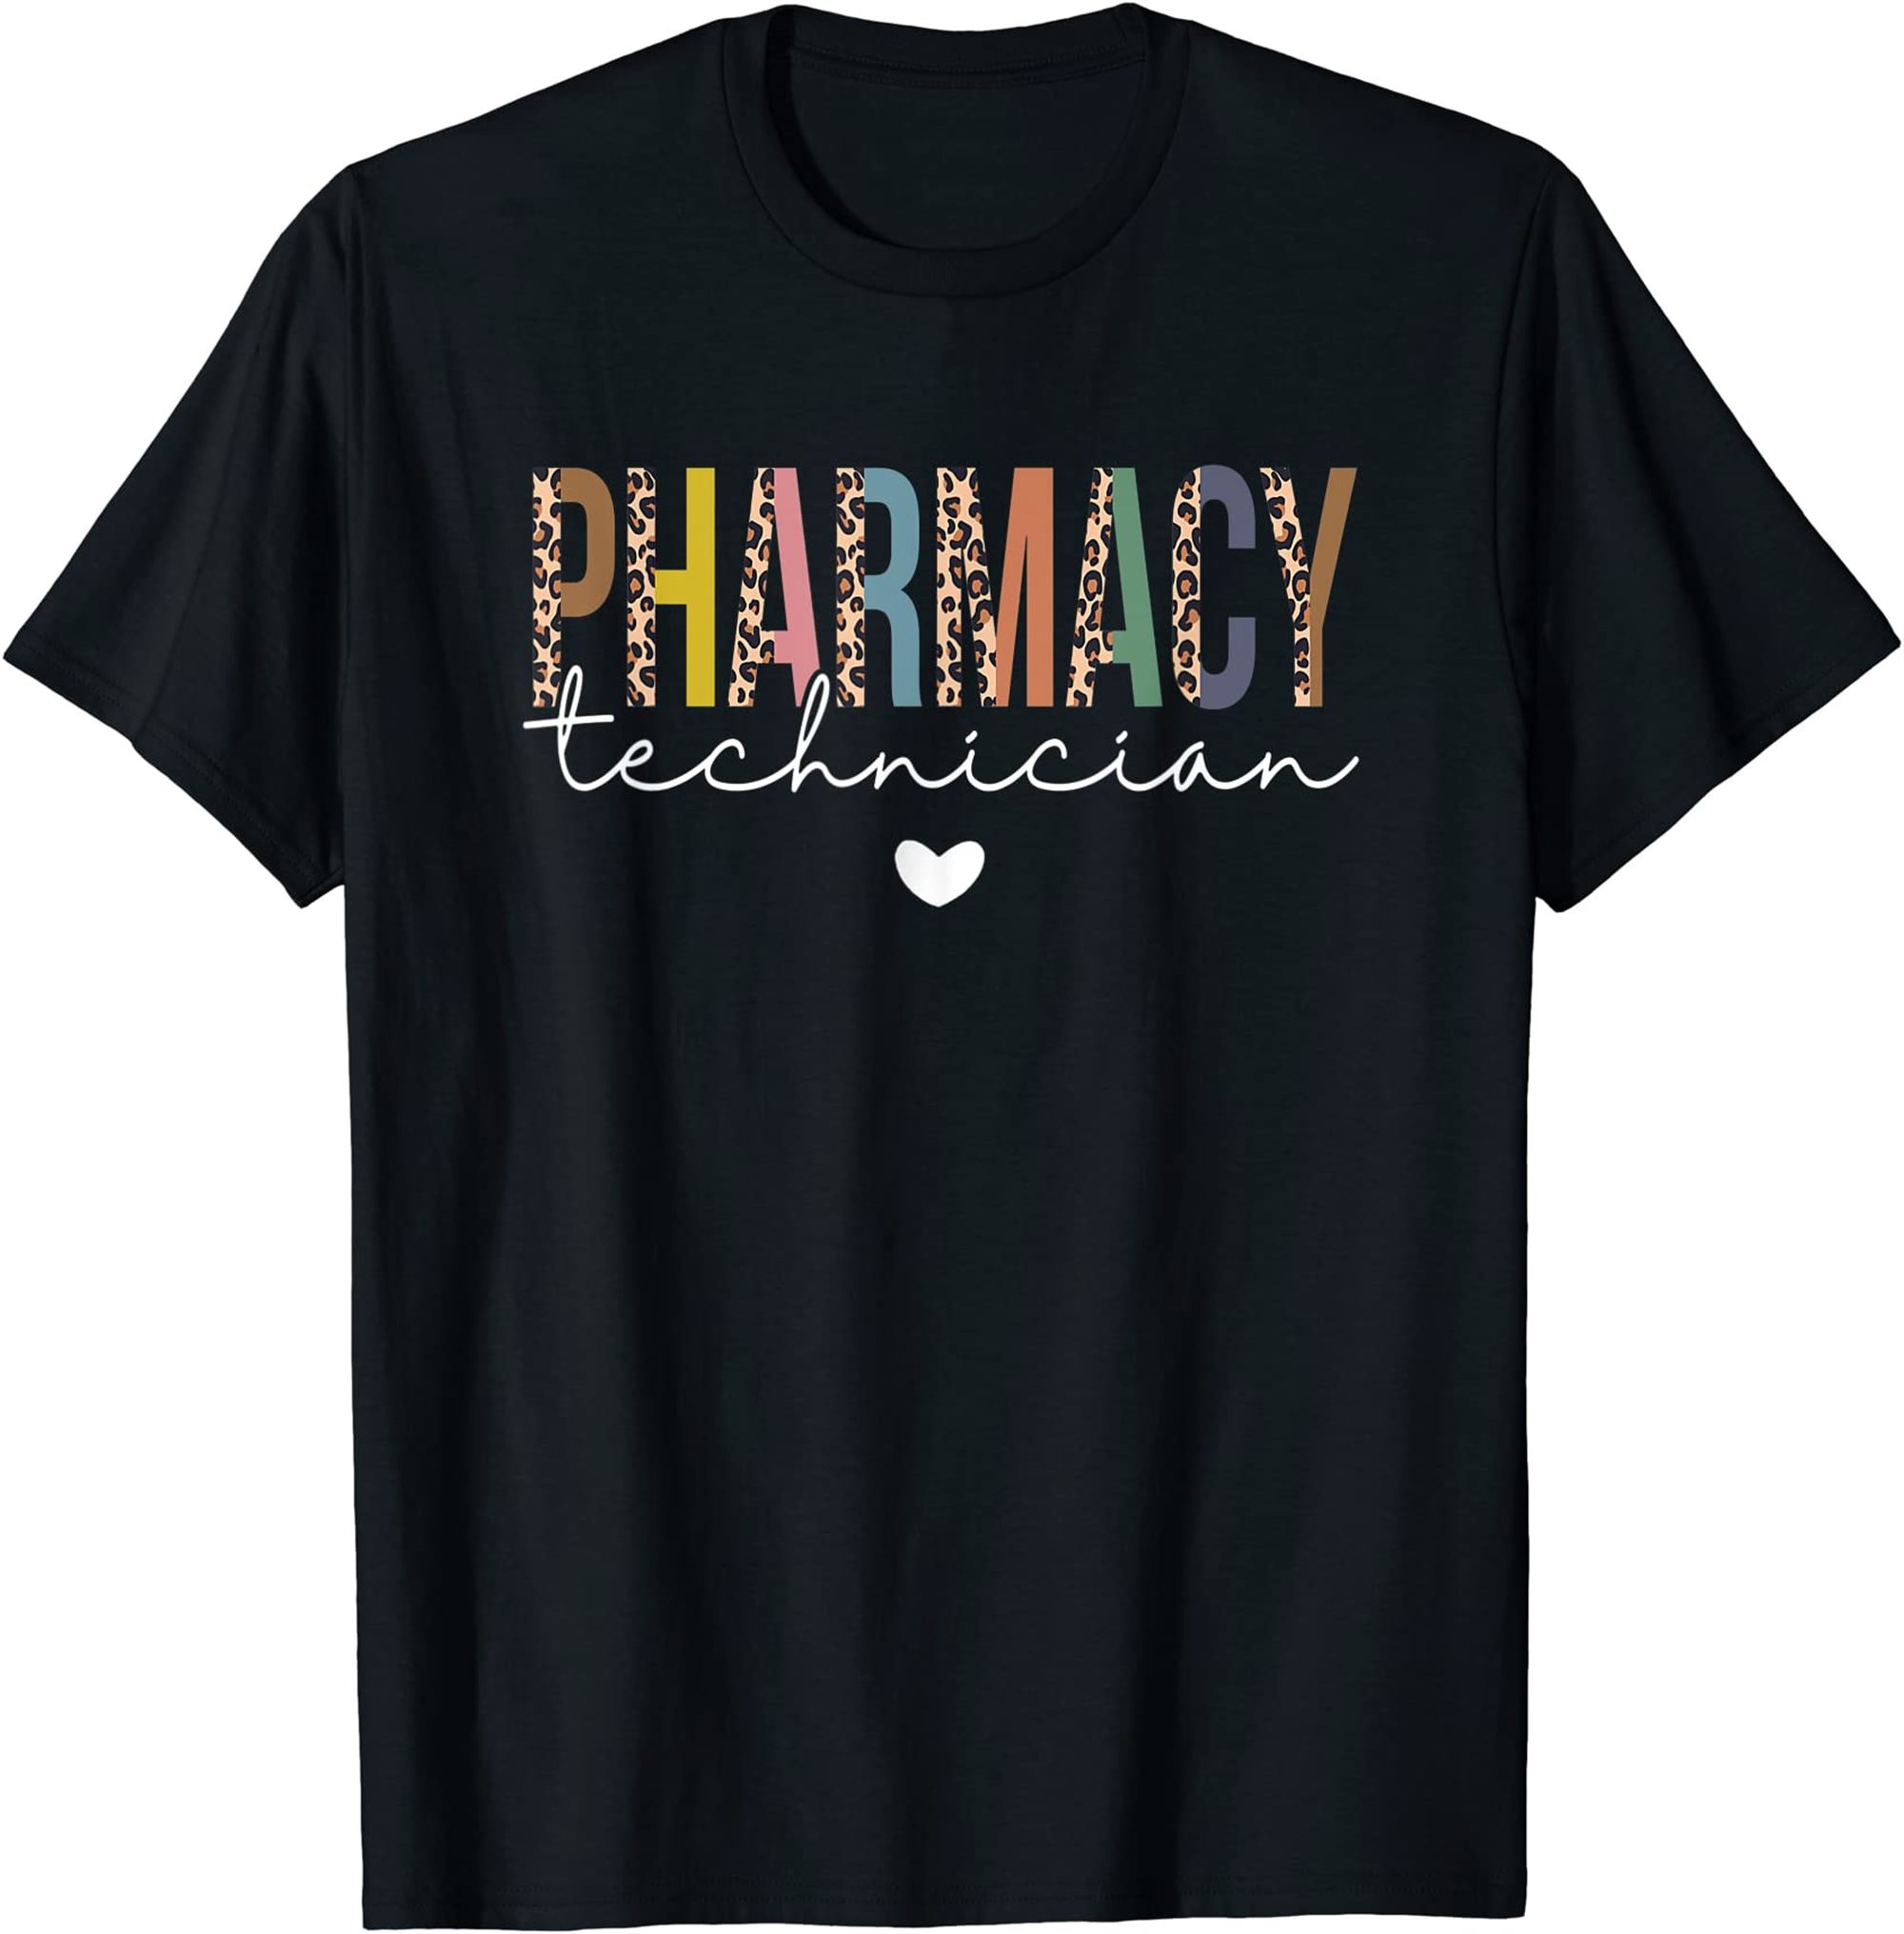 Cpht Leopard Certified Pharmacy Technician T-shirt Full Size Up To 5xl